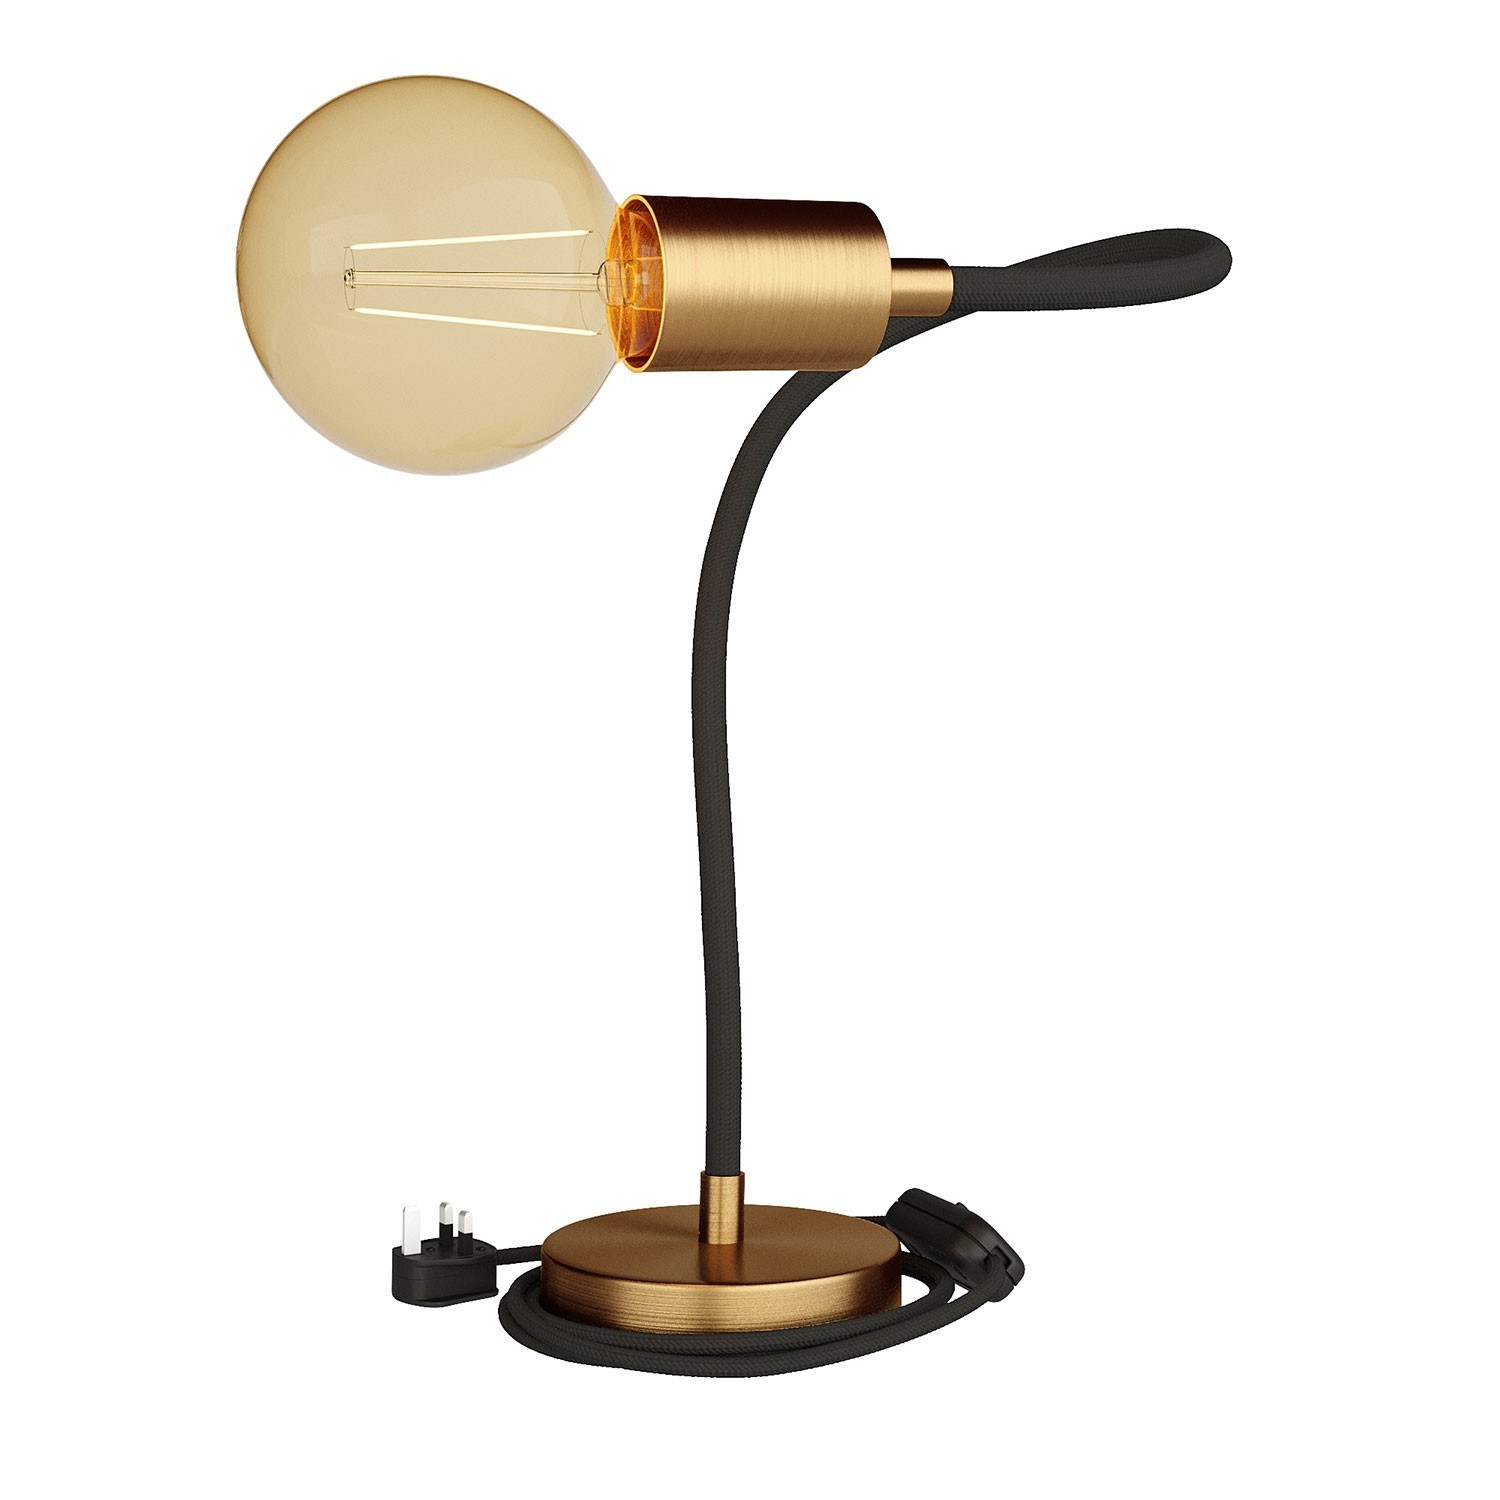 Table Flex flexible table lamp providing diffused light